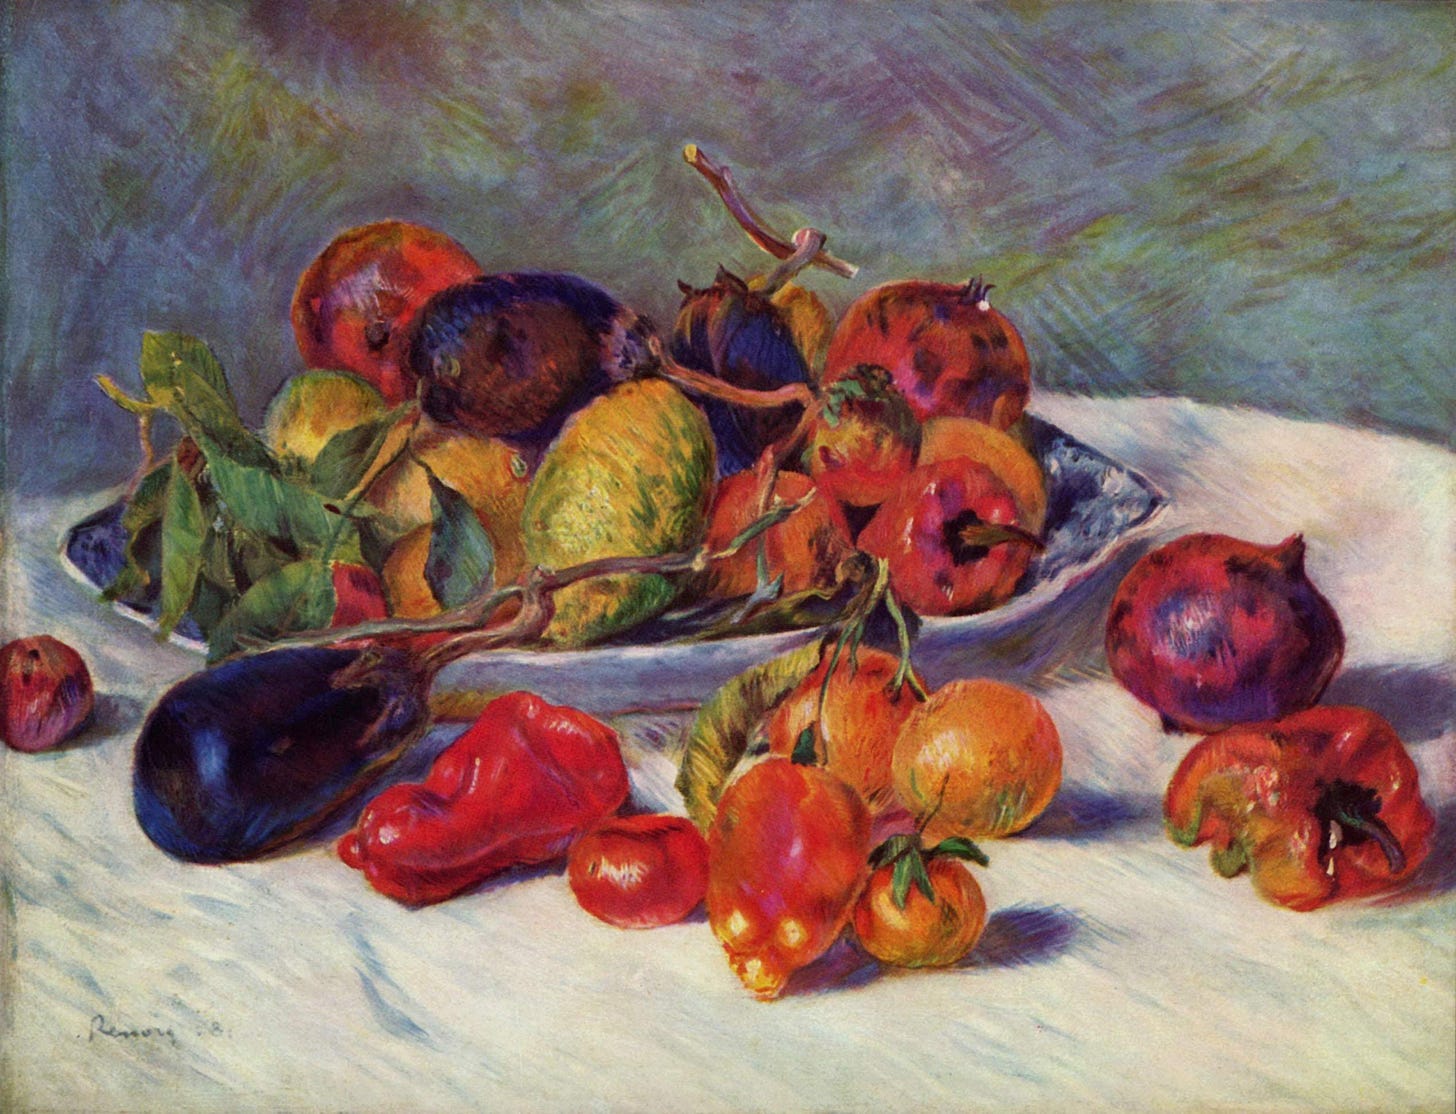 https://uploads1.wikiart.org/images/pierre-auguste-renoir/still-life-with-fruit-1881.jpg